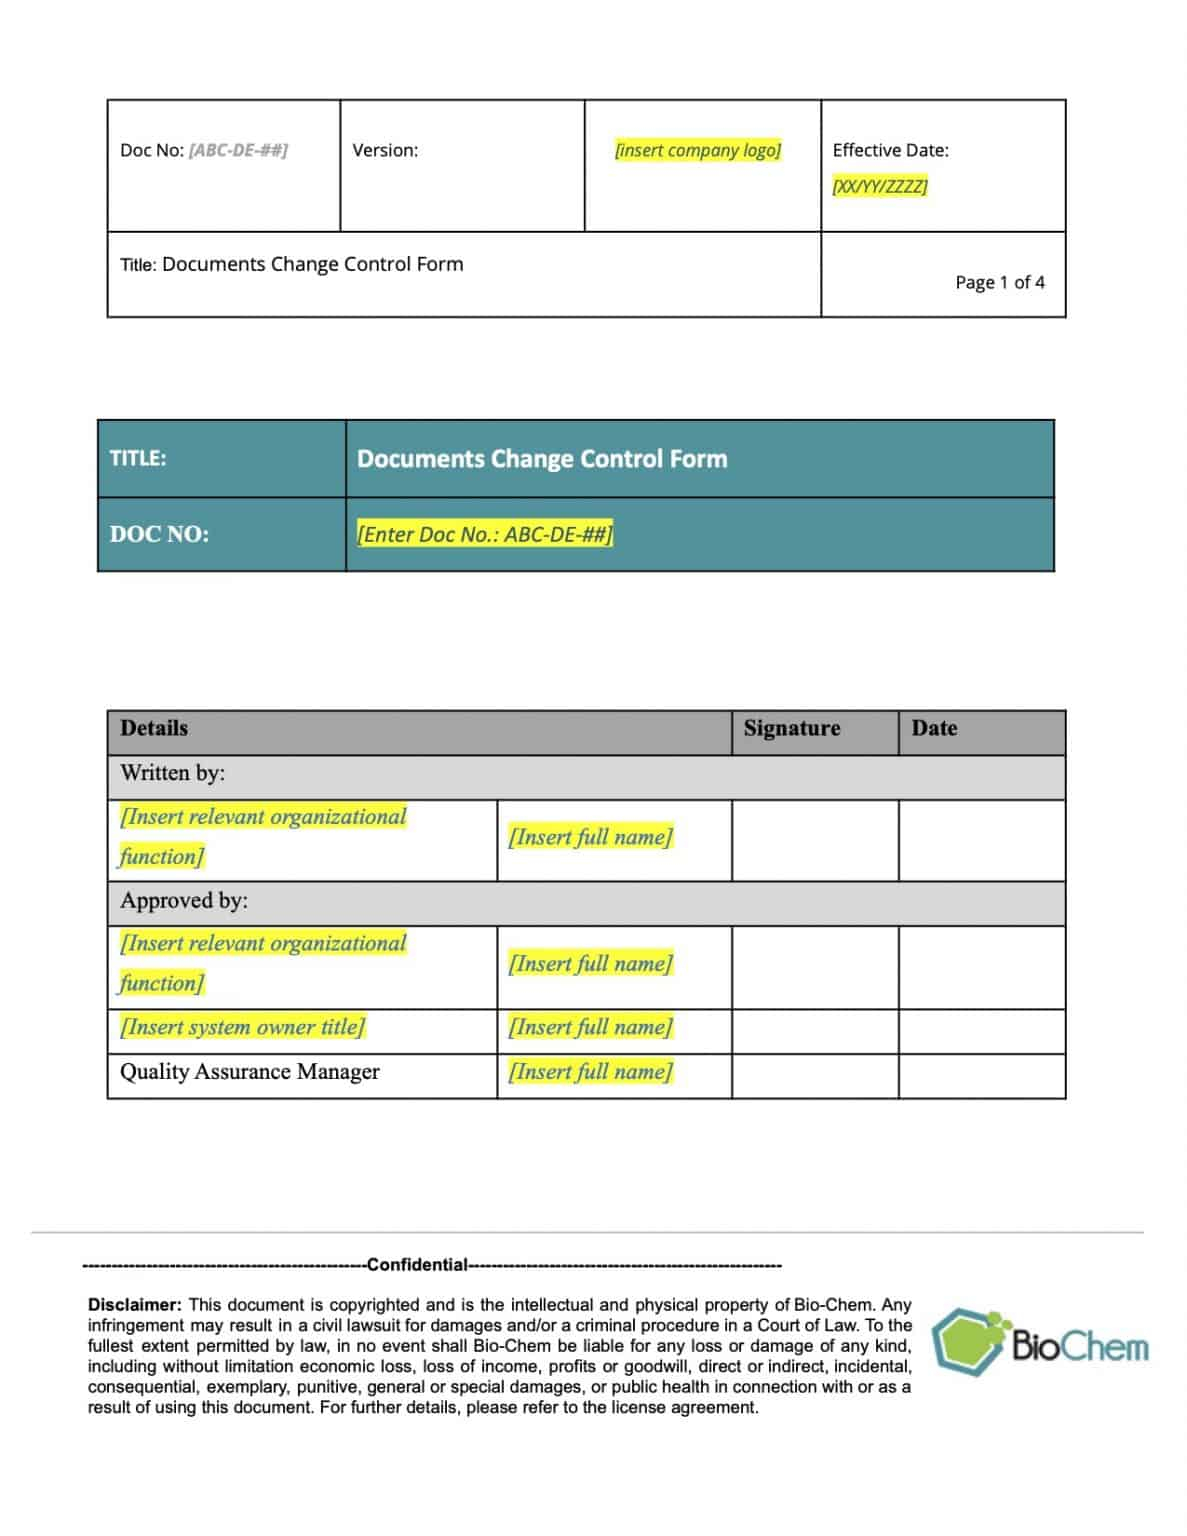 Document Change Control Form QMS Document Template Bio Chem